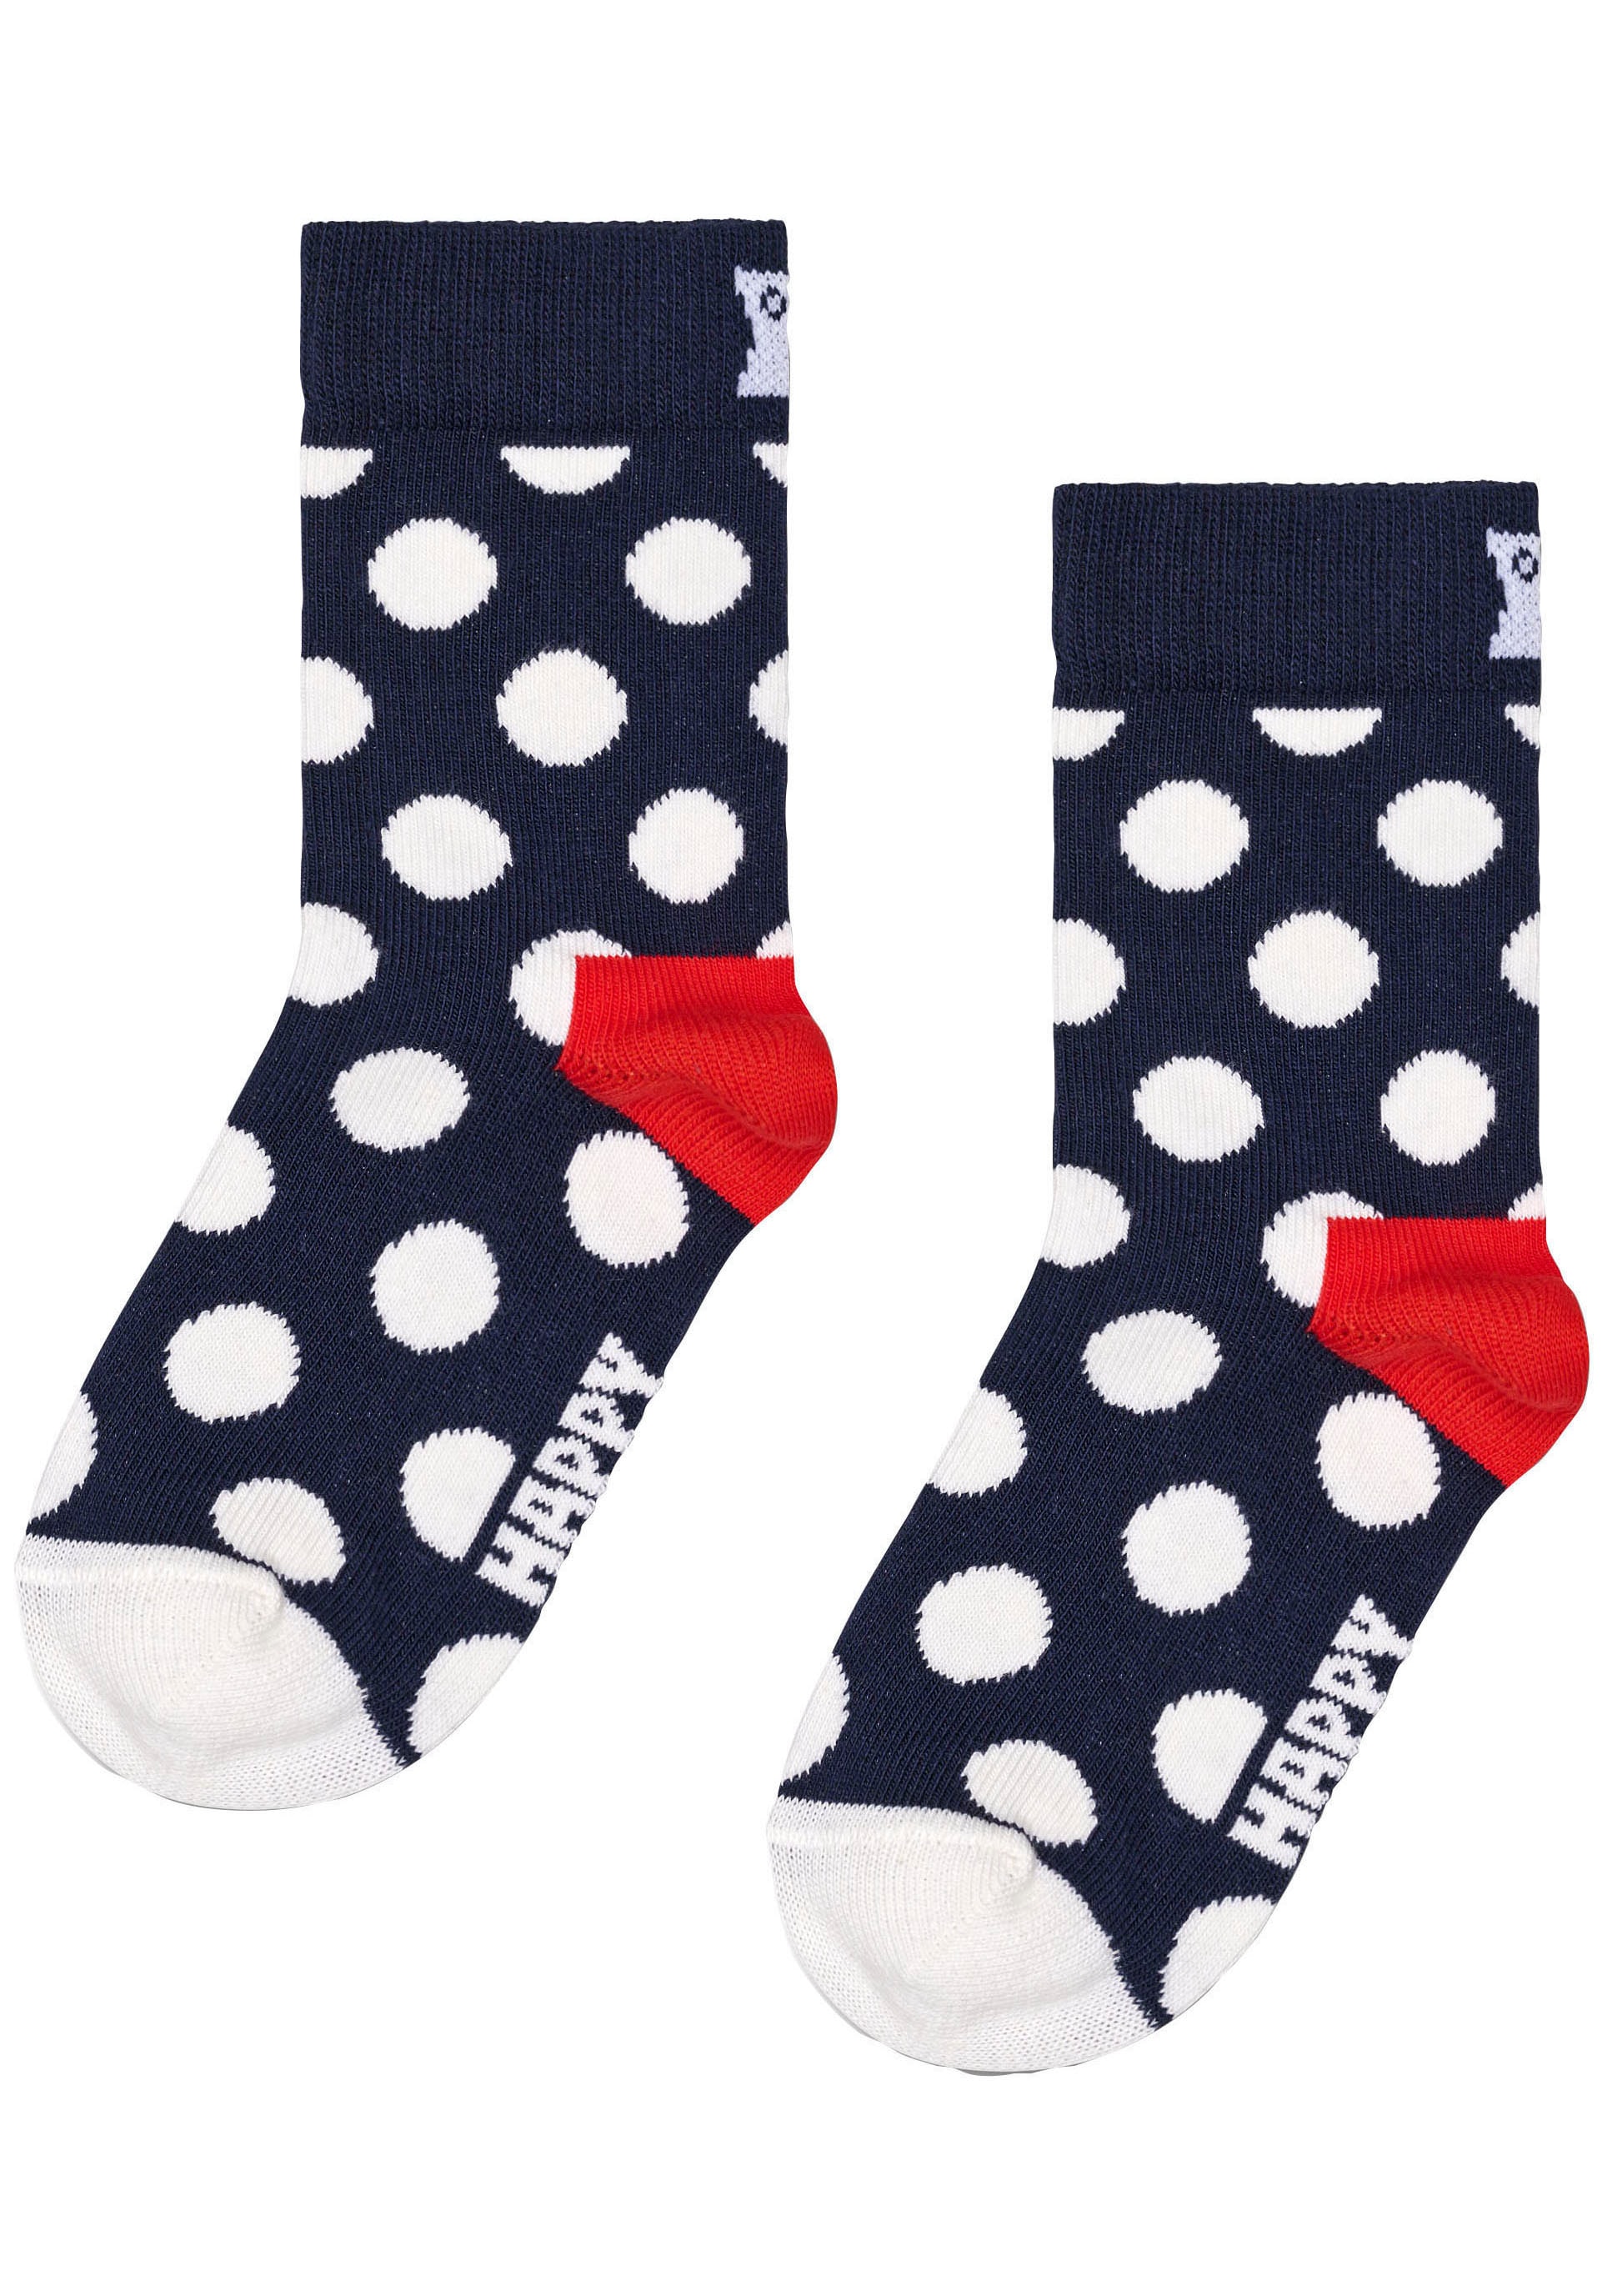 Happy Socks Socken »2-Pack Kids Stripe Socks«, (Packung, 2 Paar), Punkte & Streifen